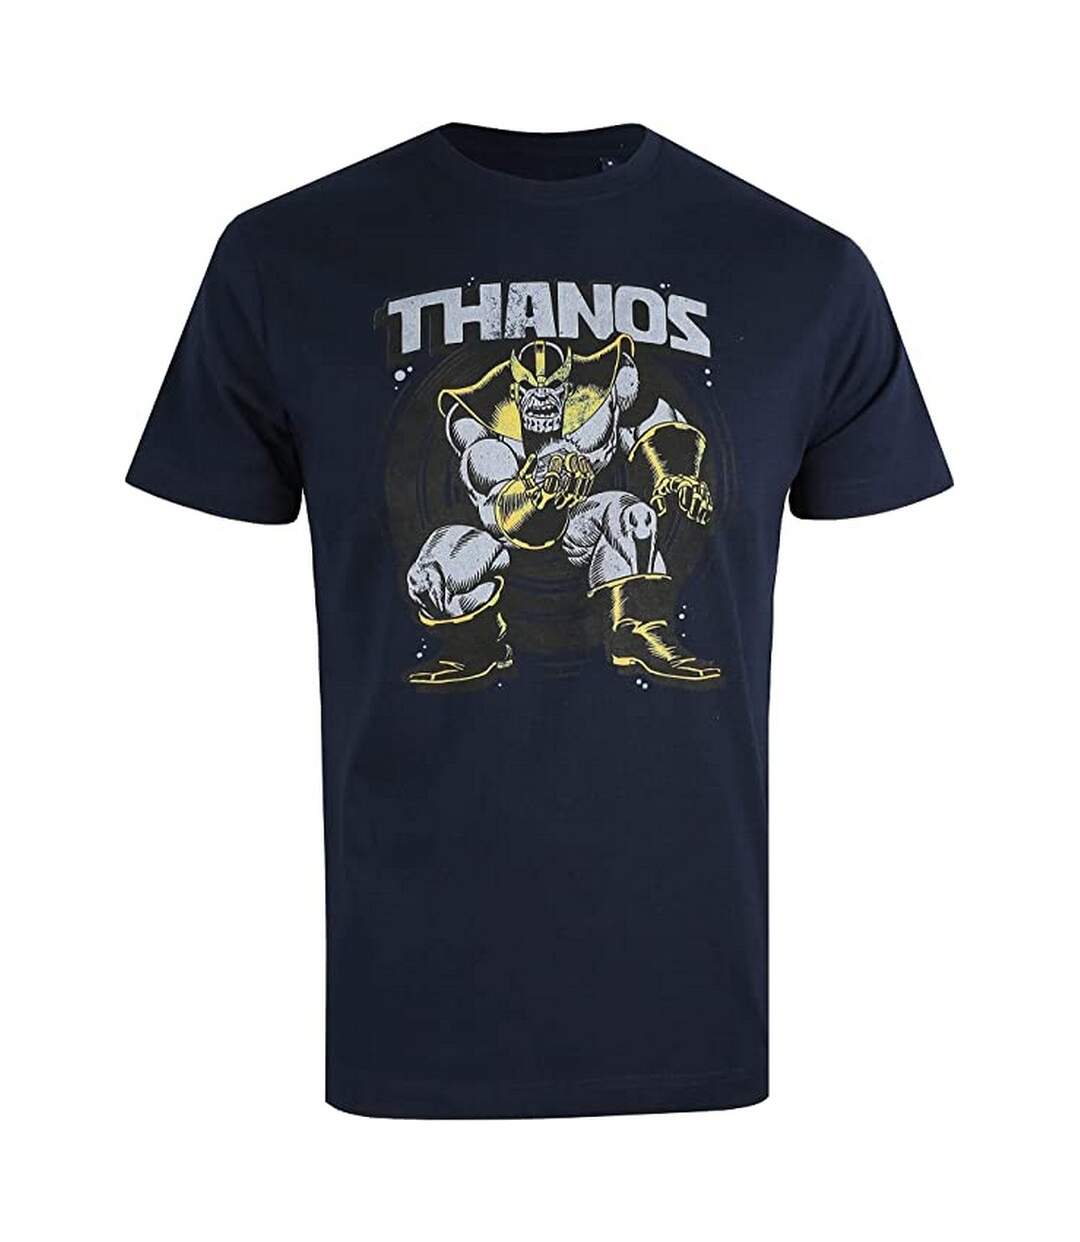 Marvel Mens Stance Thanos T-Shirt (Marine/Gris/Noir) - UTTV677